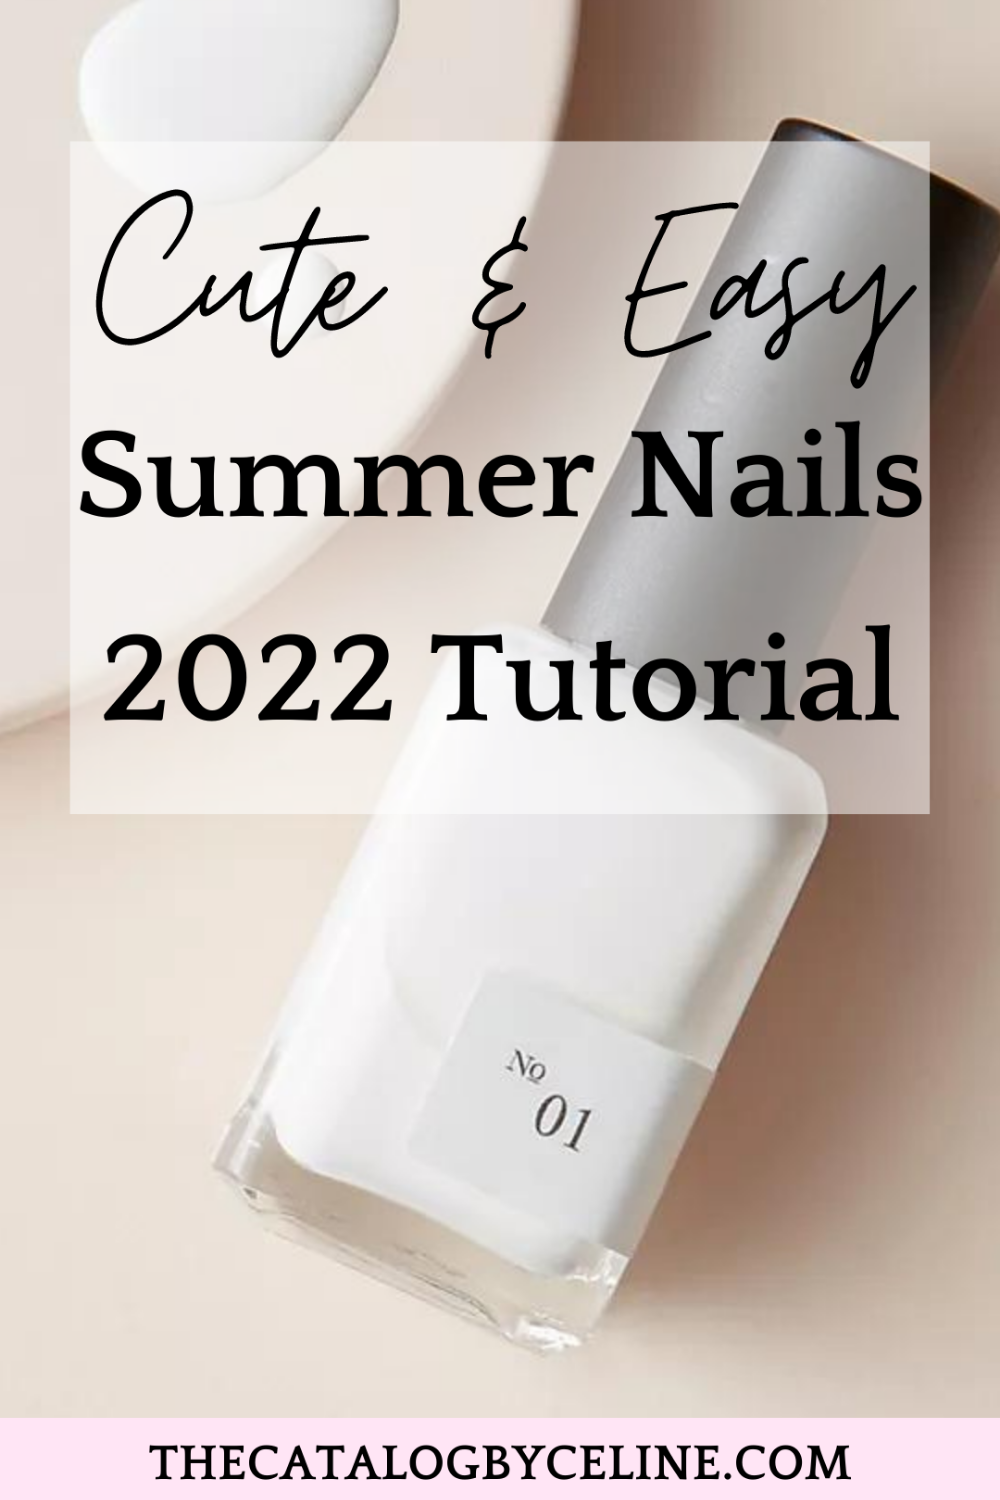 Cute & Easy Summer Nails 2022 Tutorial